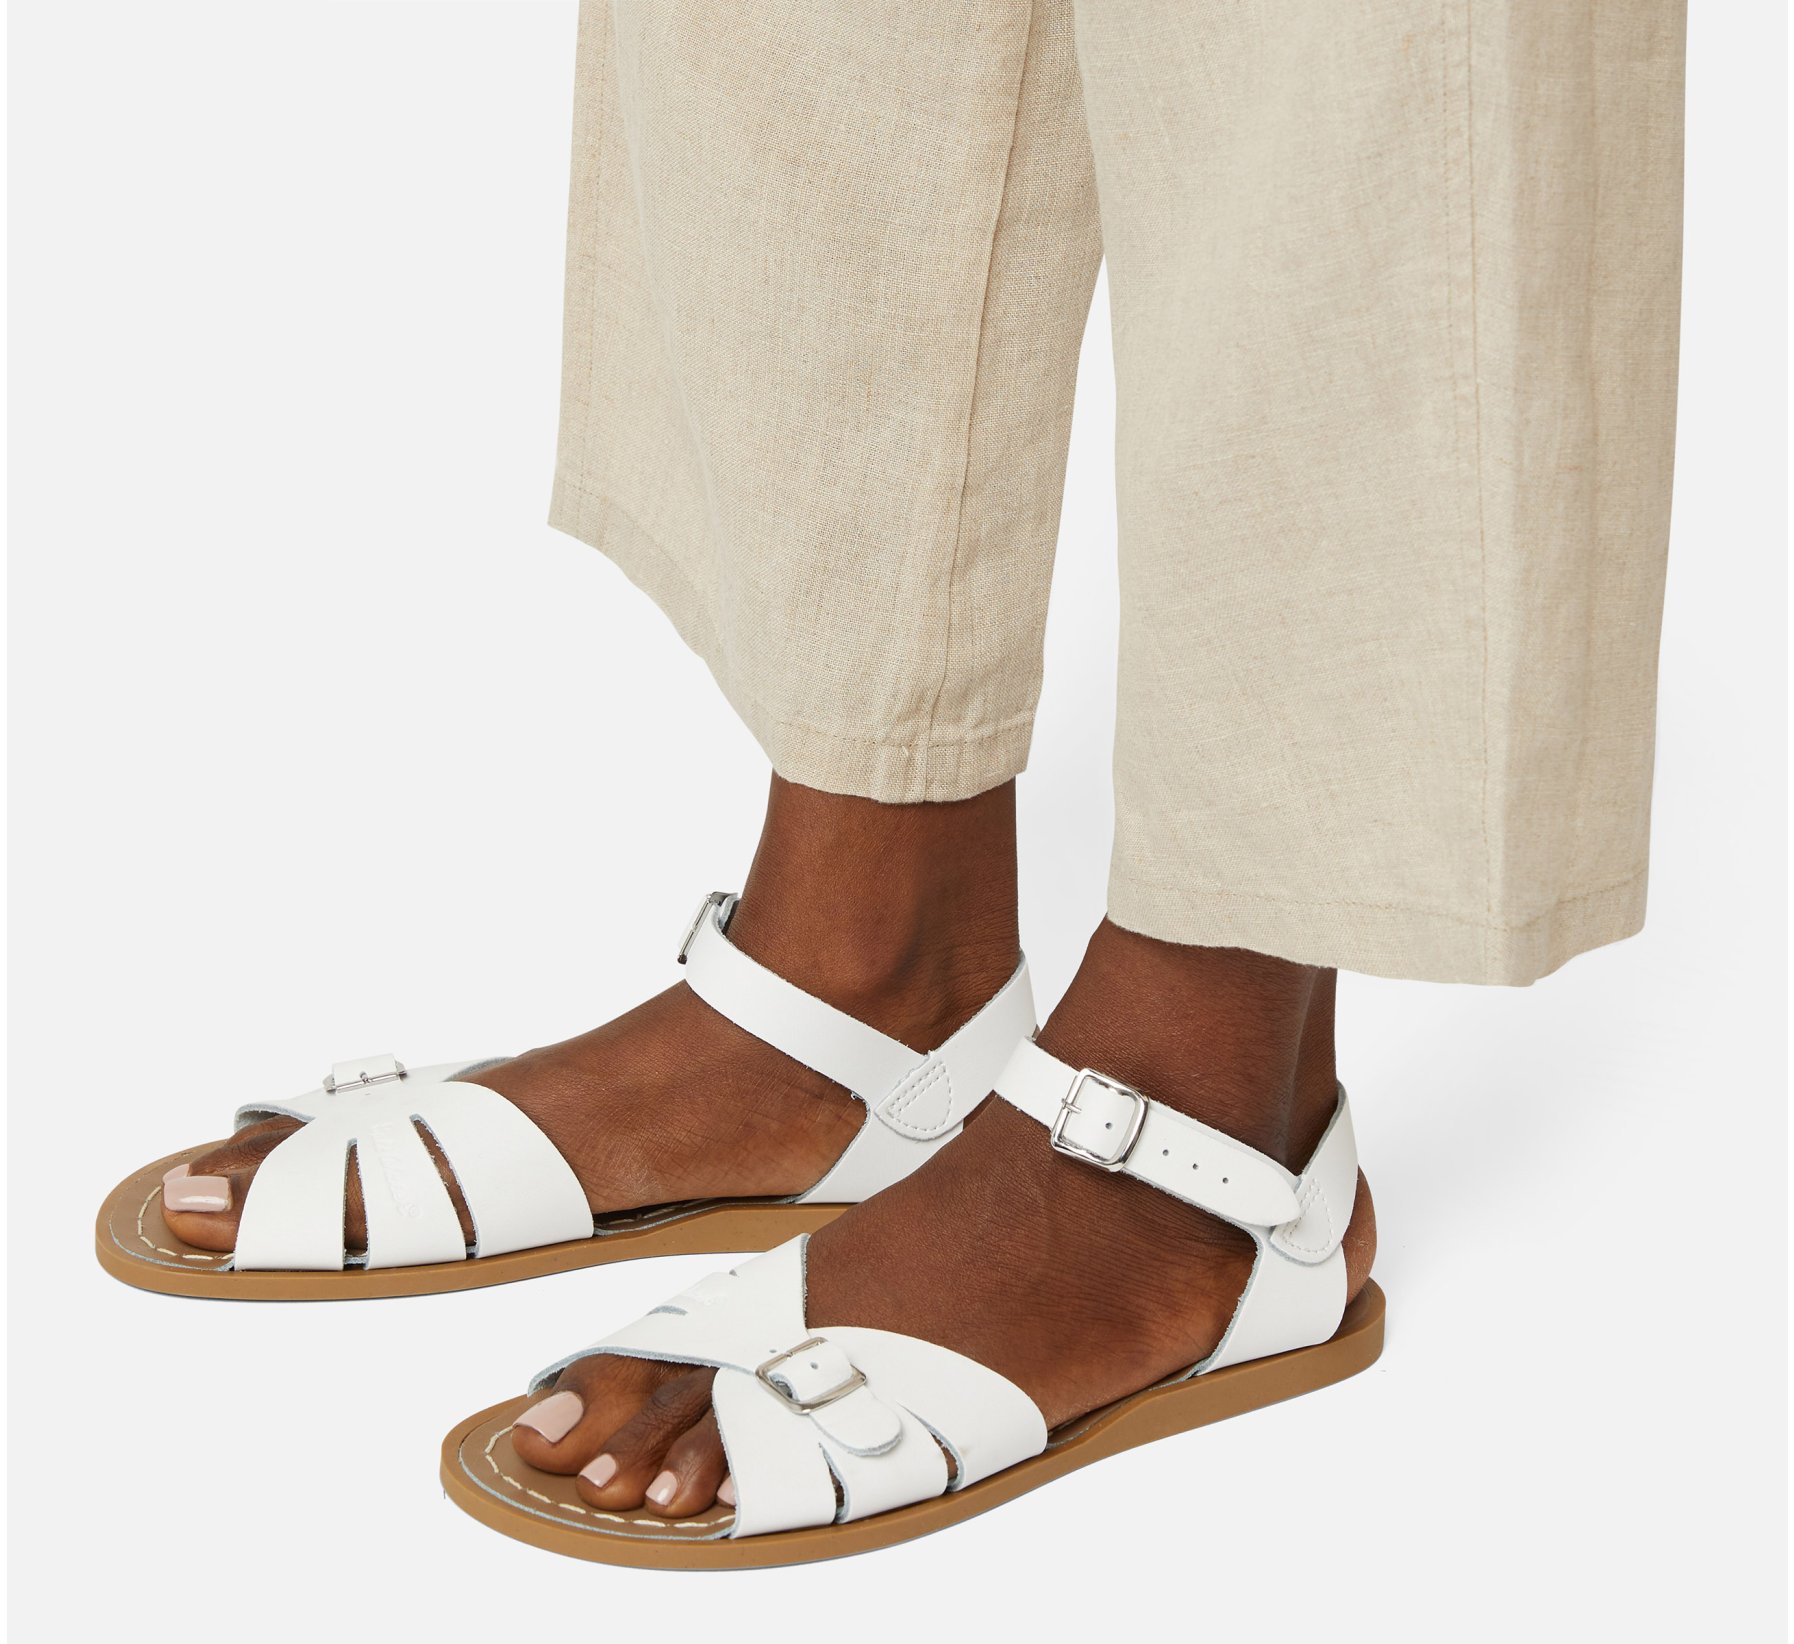 Classic White Sandal - Salt Water Sandals